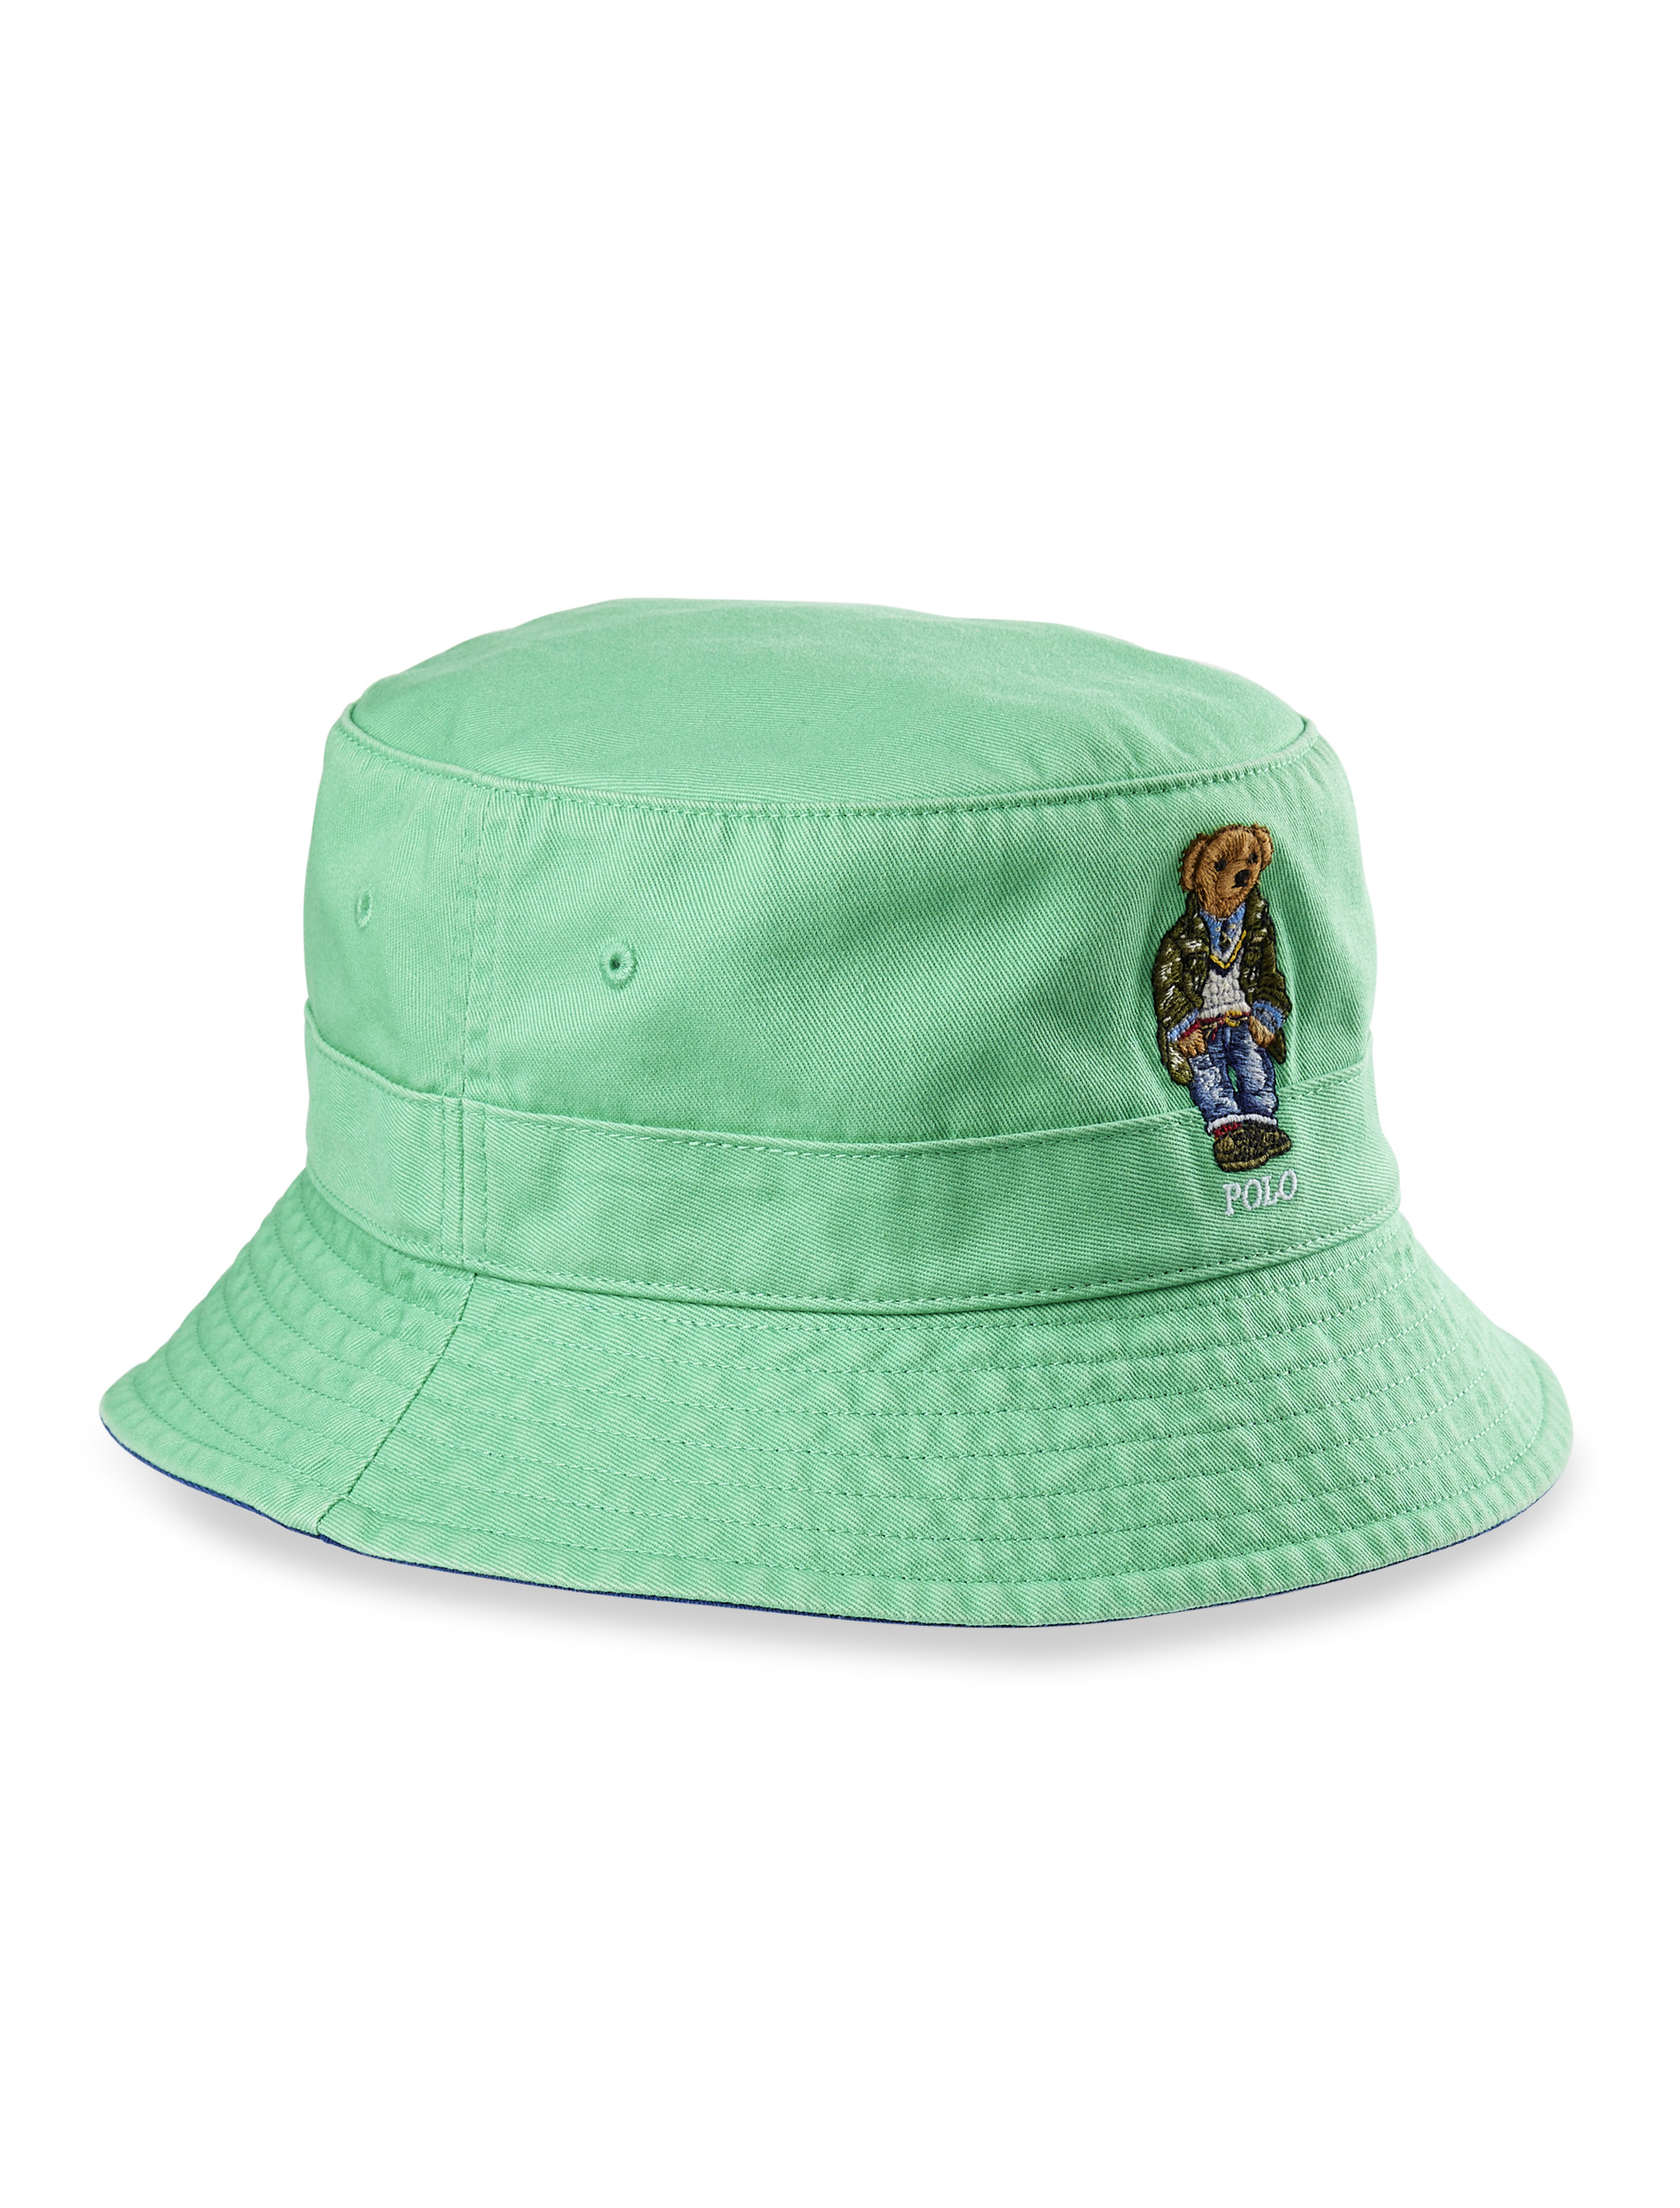 XXL Fishing Hat through 5XL Sun Hats for Big Heads.